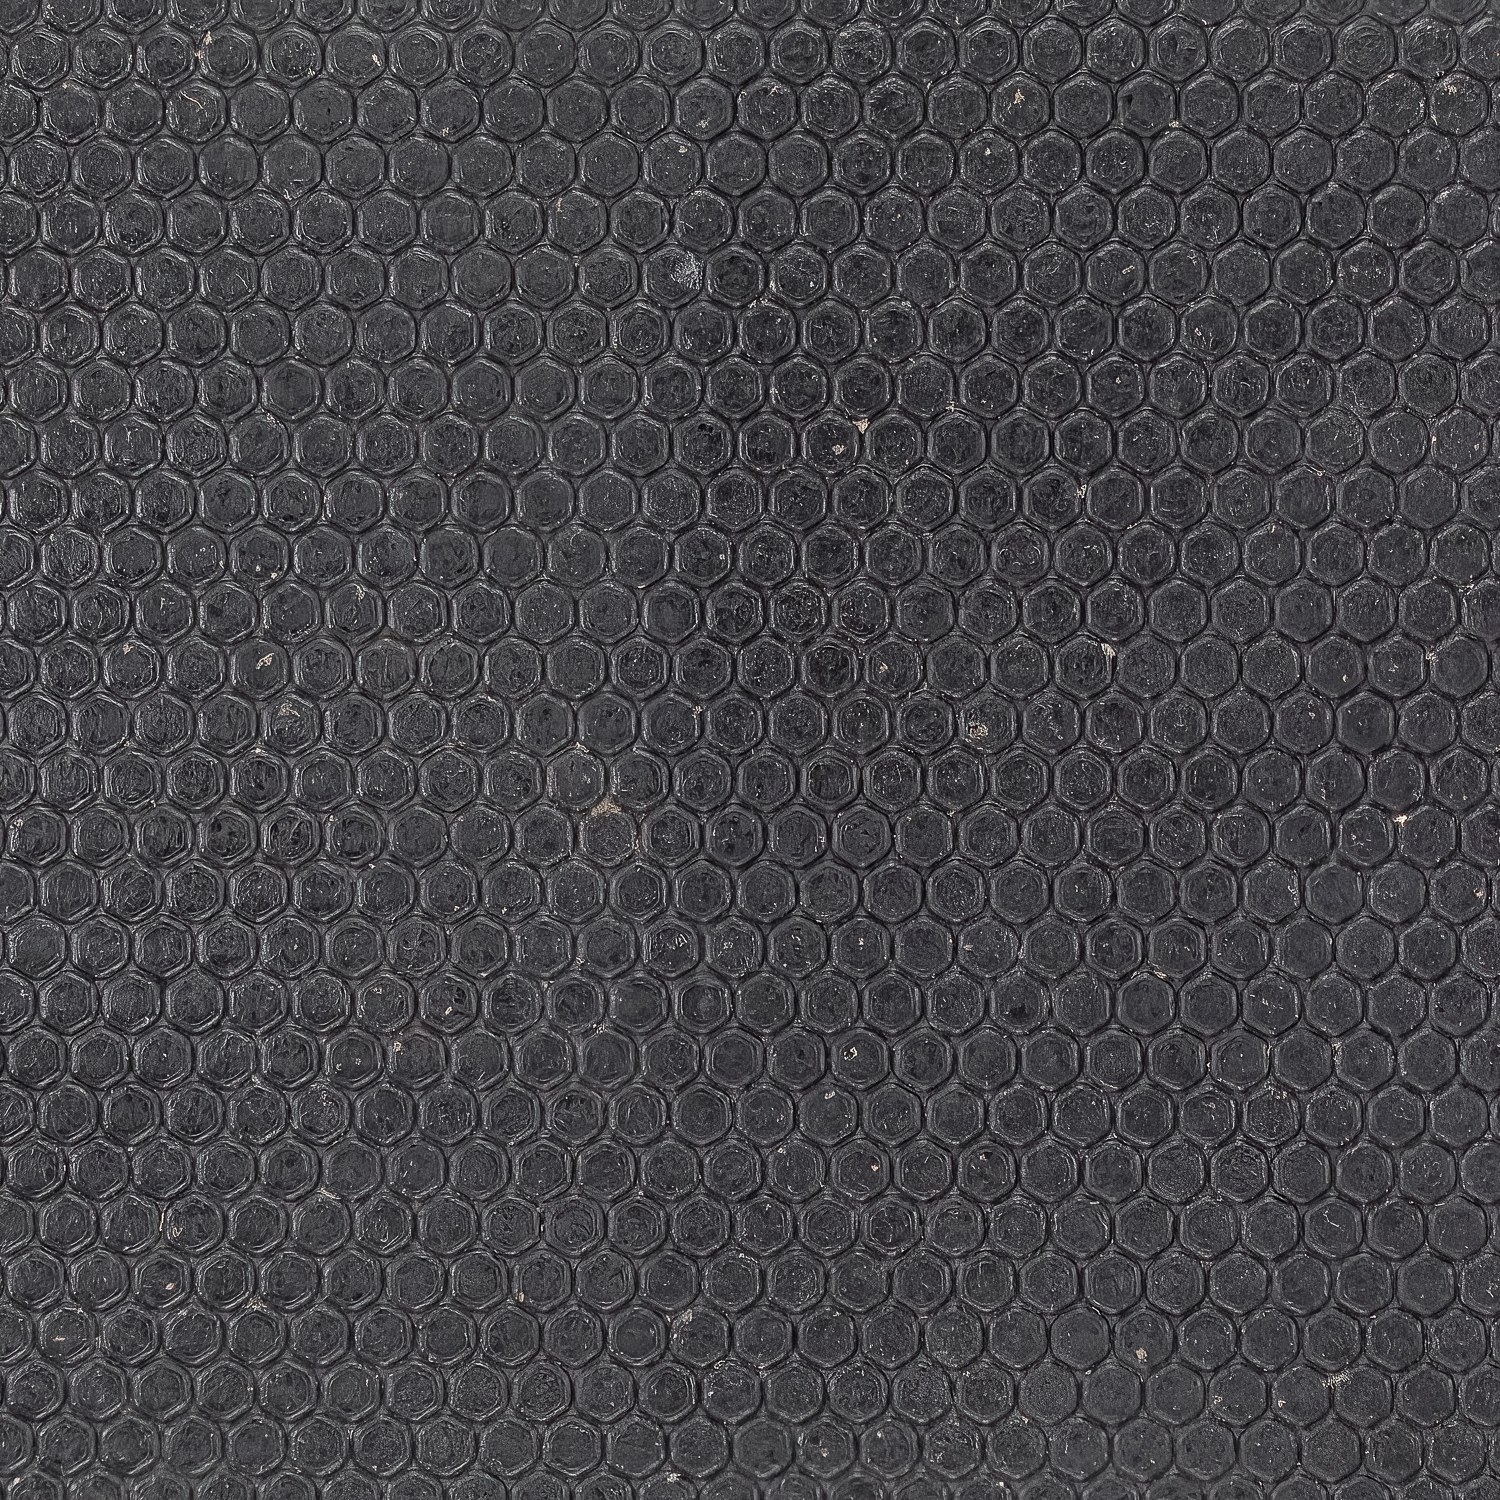 Sundance Mats 4x6 Ft x 3/4 Inch Interlocking Surface Hexagon top close up